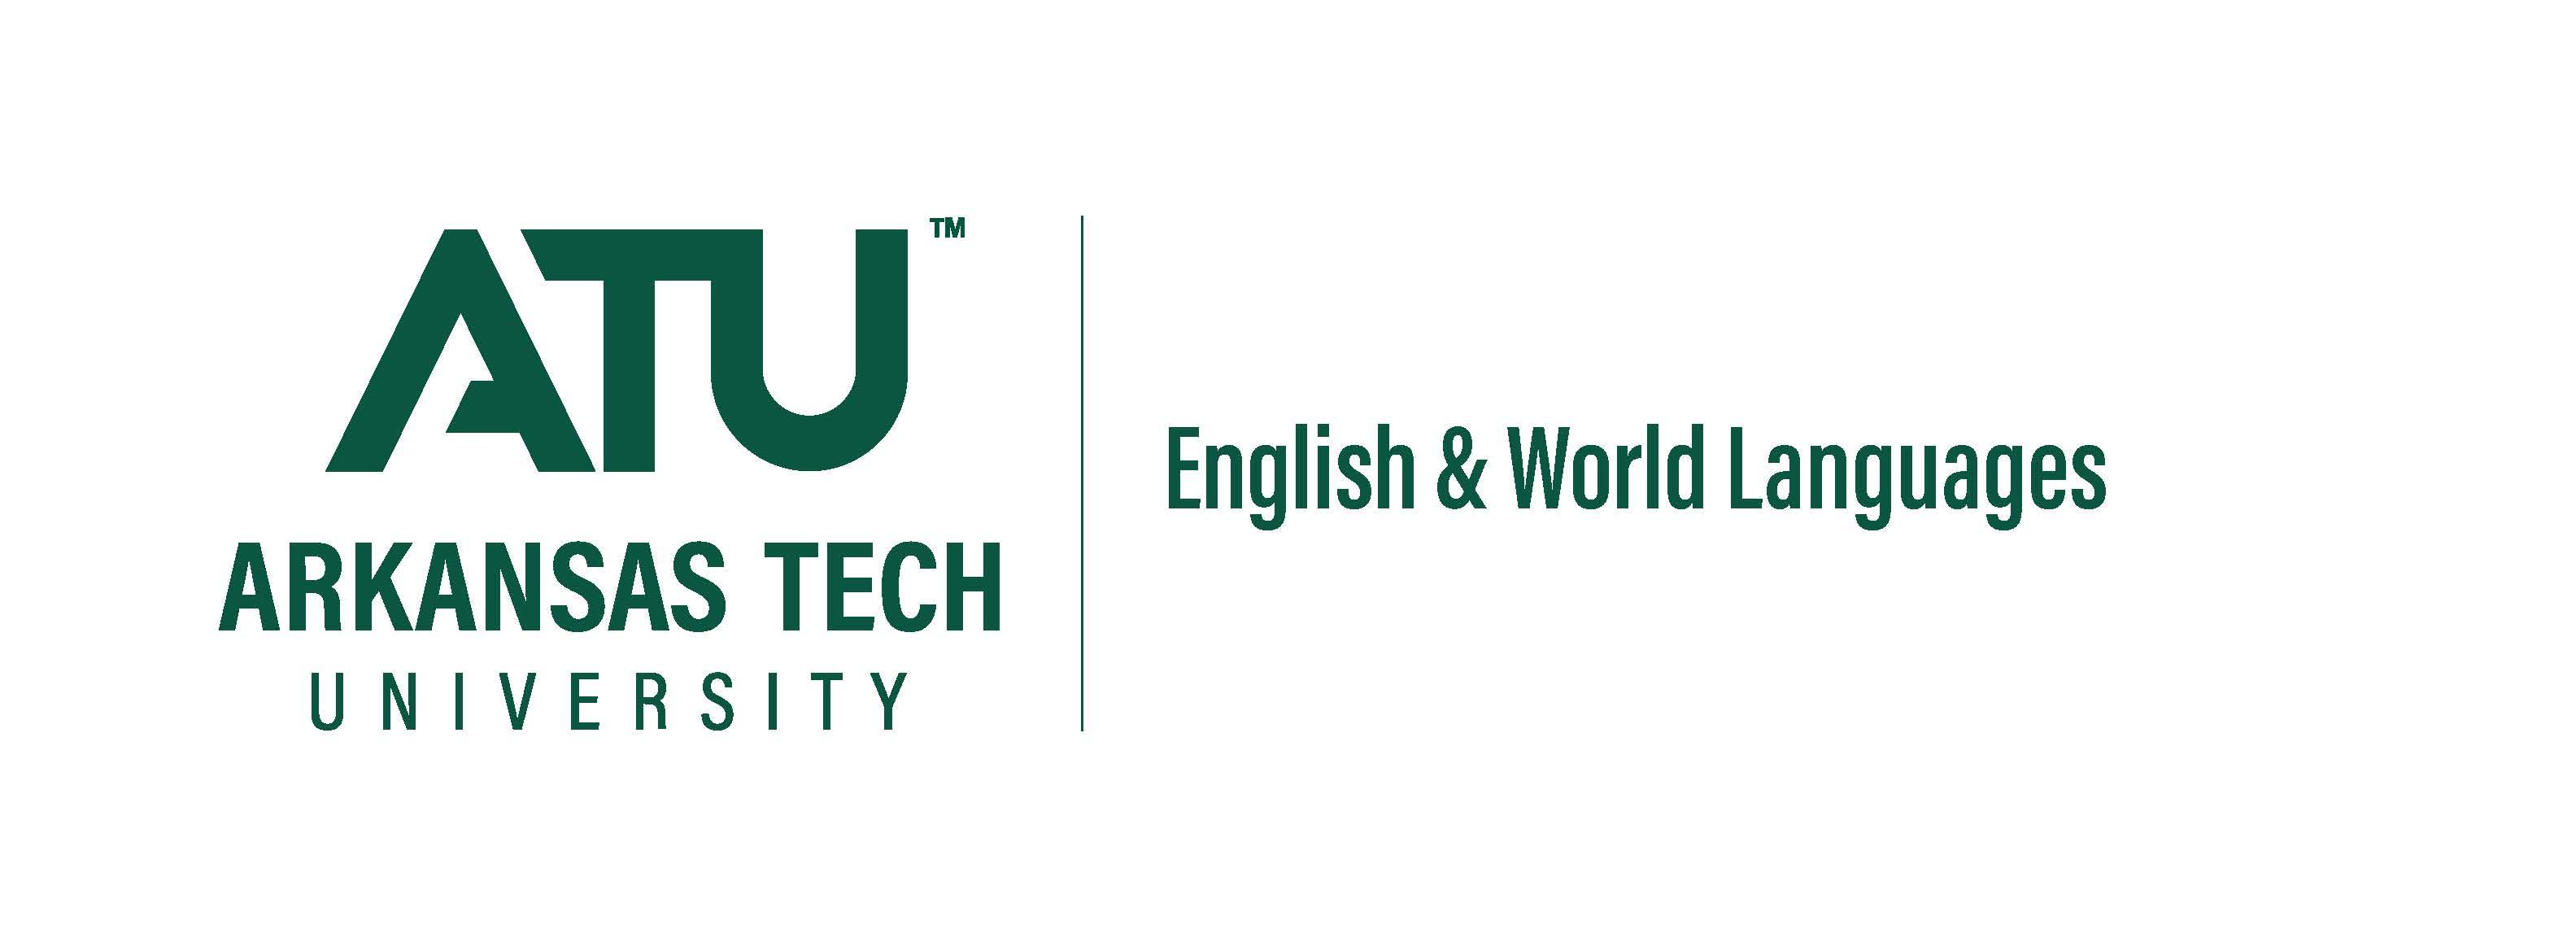 ewl green logo